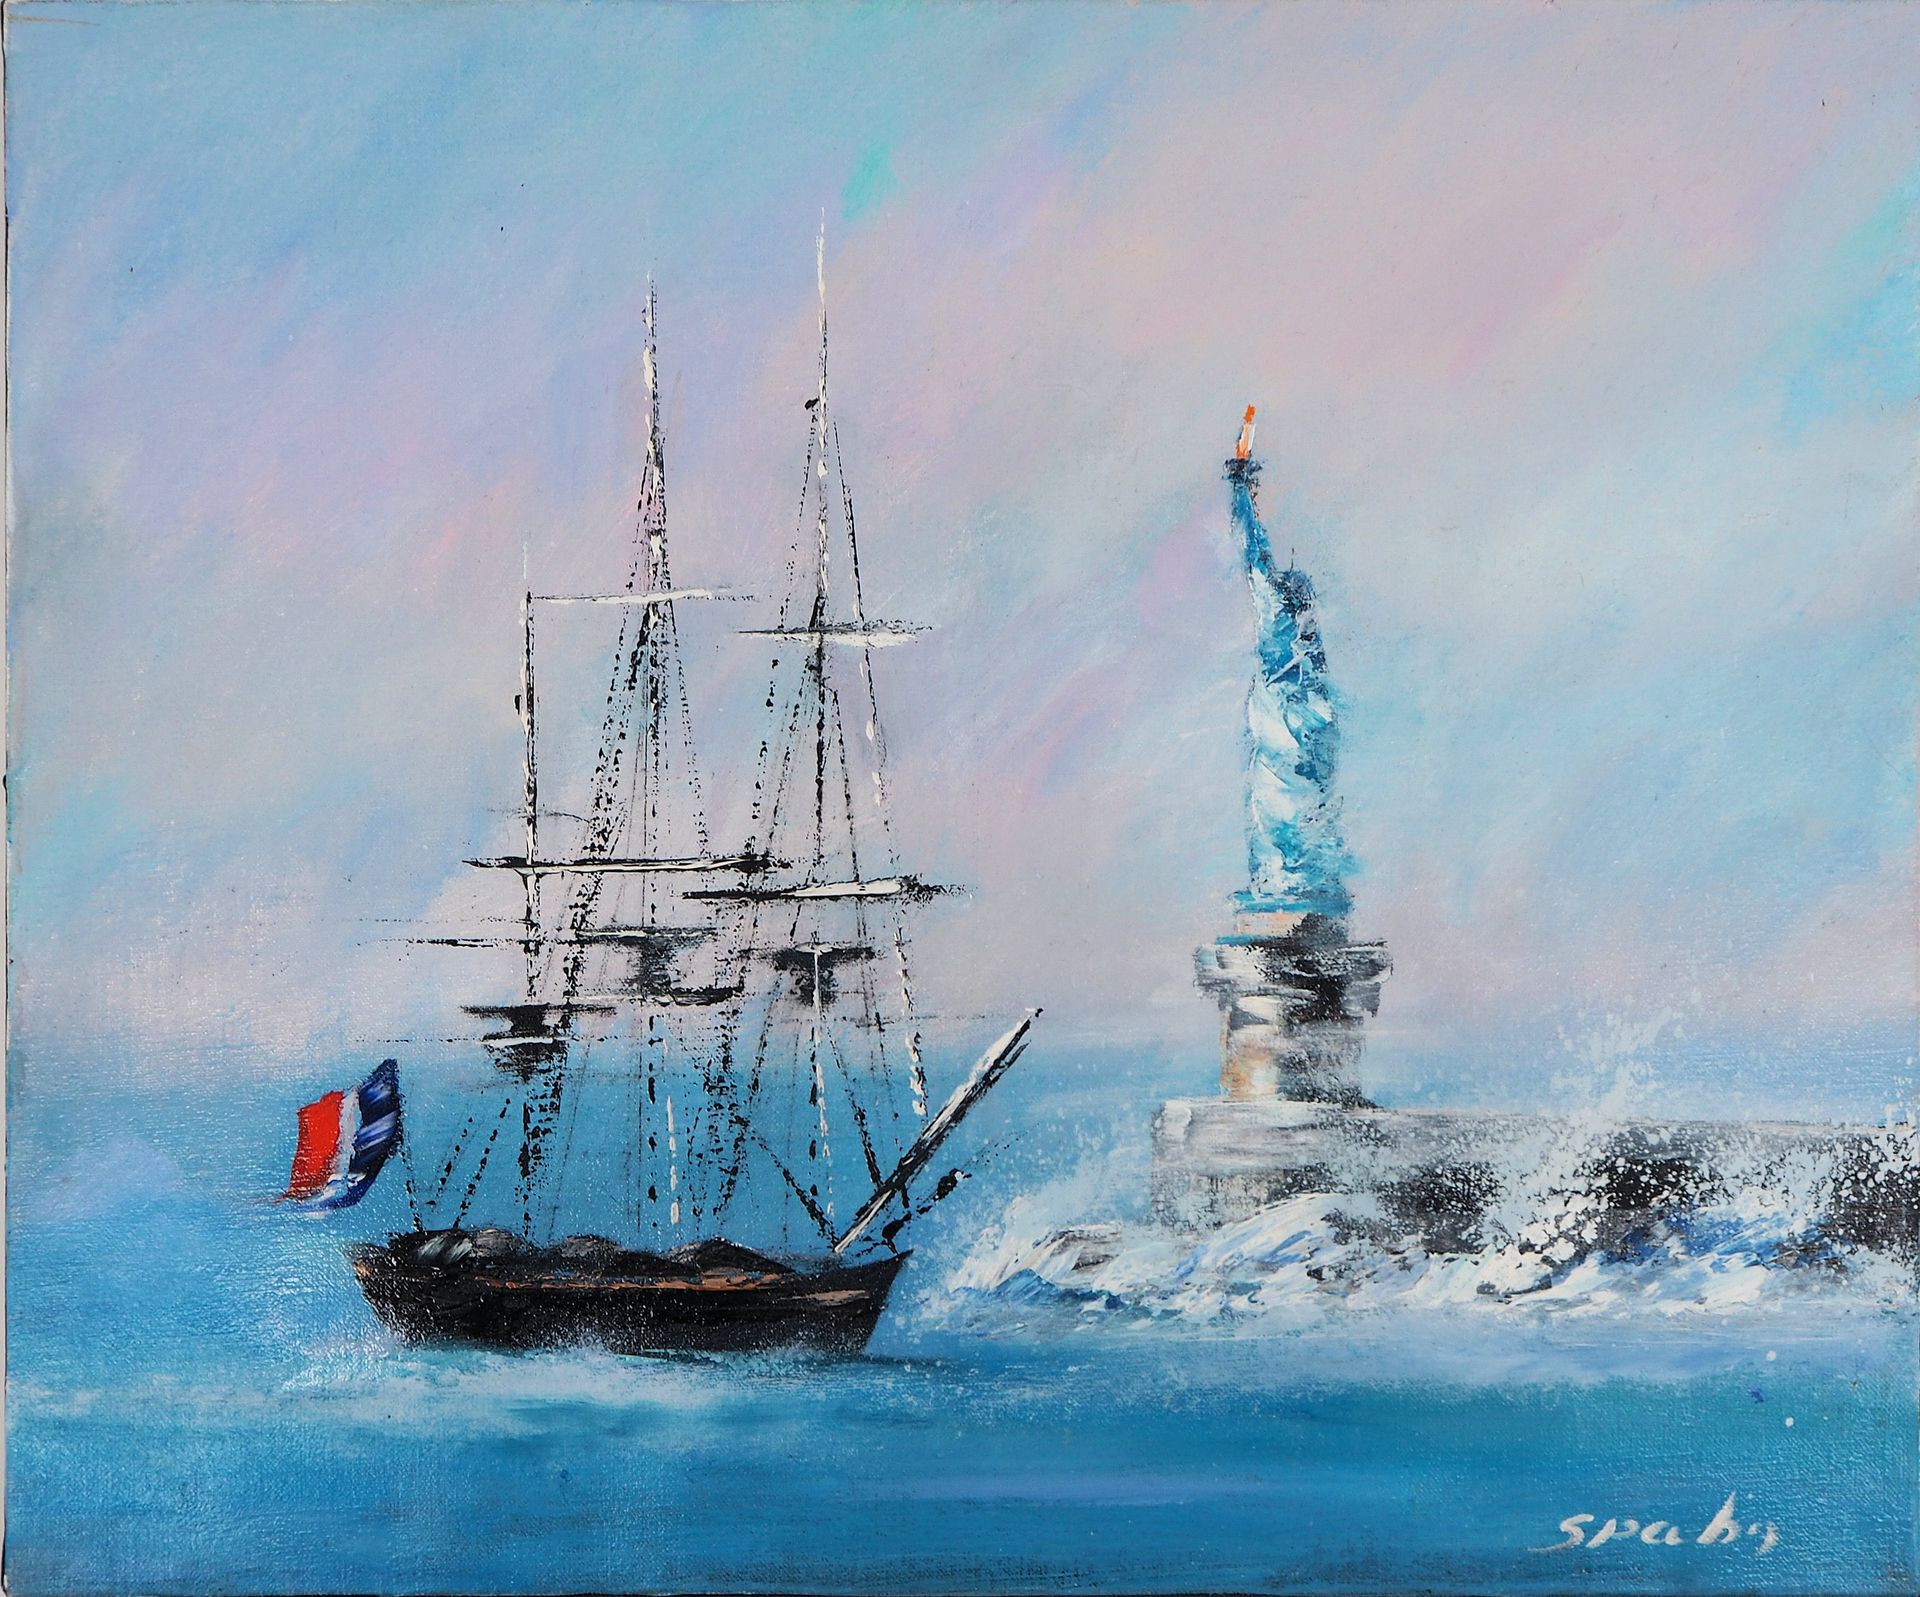 Victor SPAHN Victor SPAHN (1949)

帆船和自由女神像

原创布面油画

右下方有签名

46 x 55厘米

状况极佳



拍&hellip;